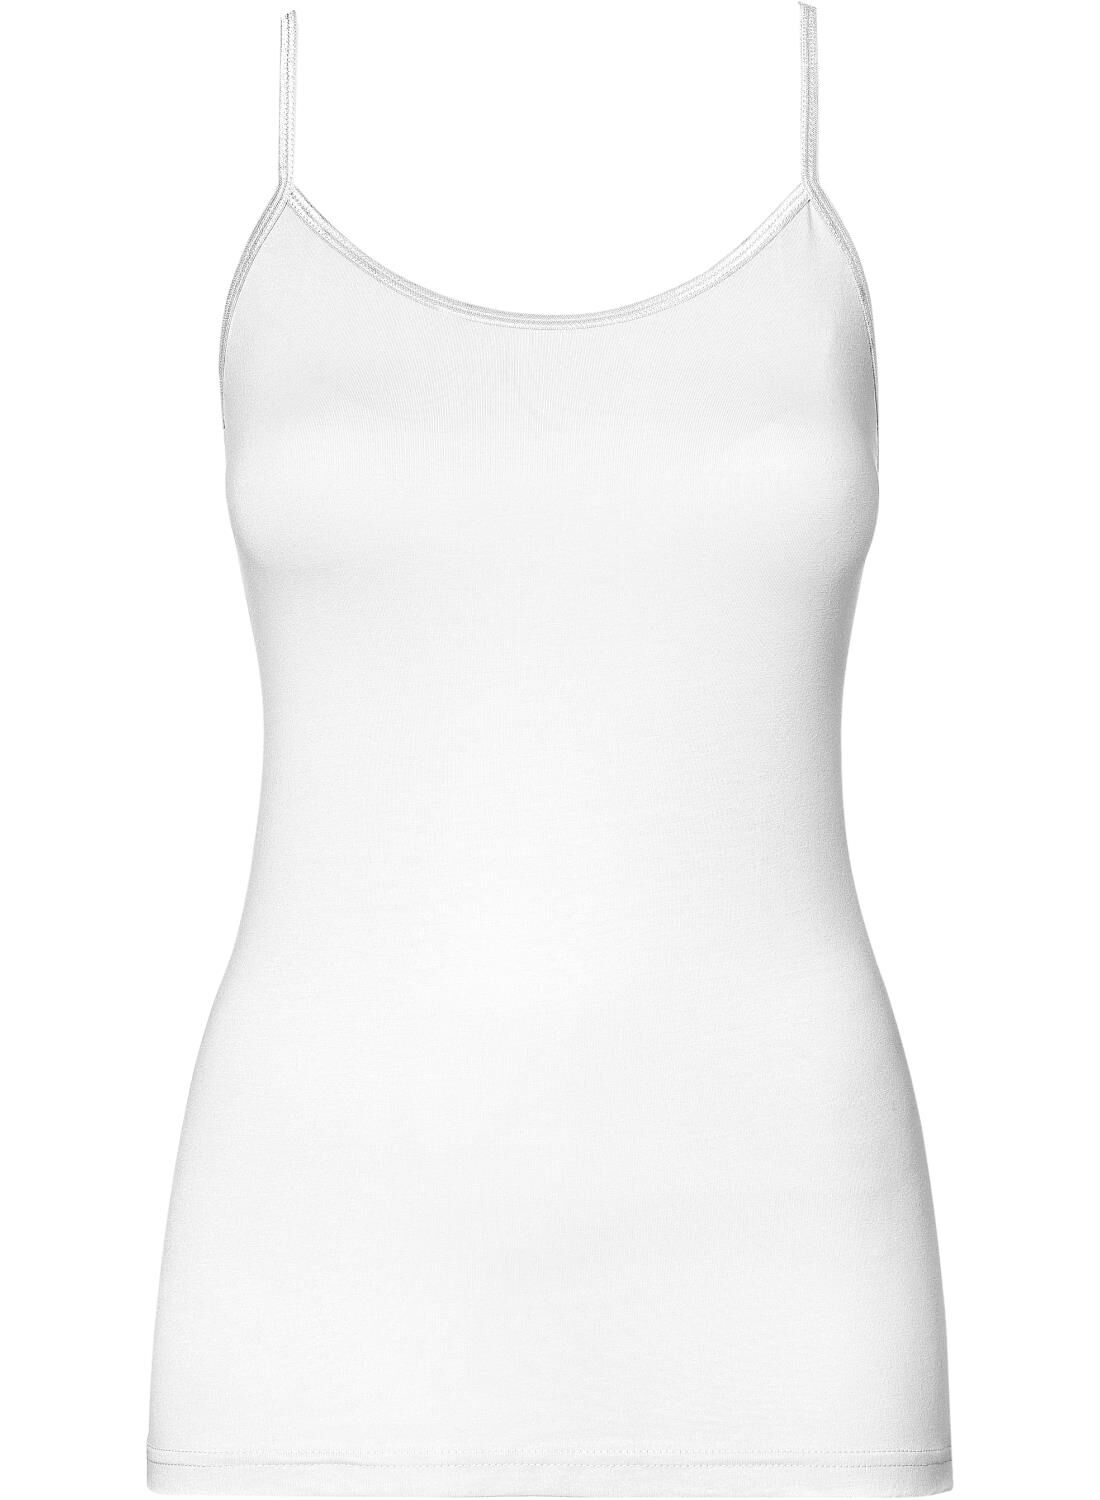 boekje in de rij gaan staan Ontvangst Wit Hemd Dames Hot Sale, SAVE 43% - loutzenhiserfuneralhomes.com